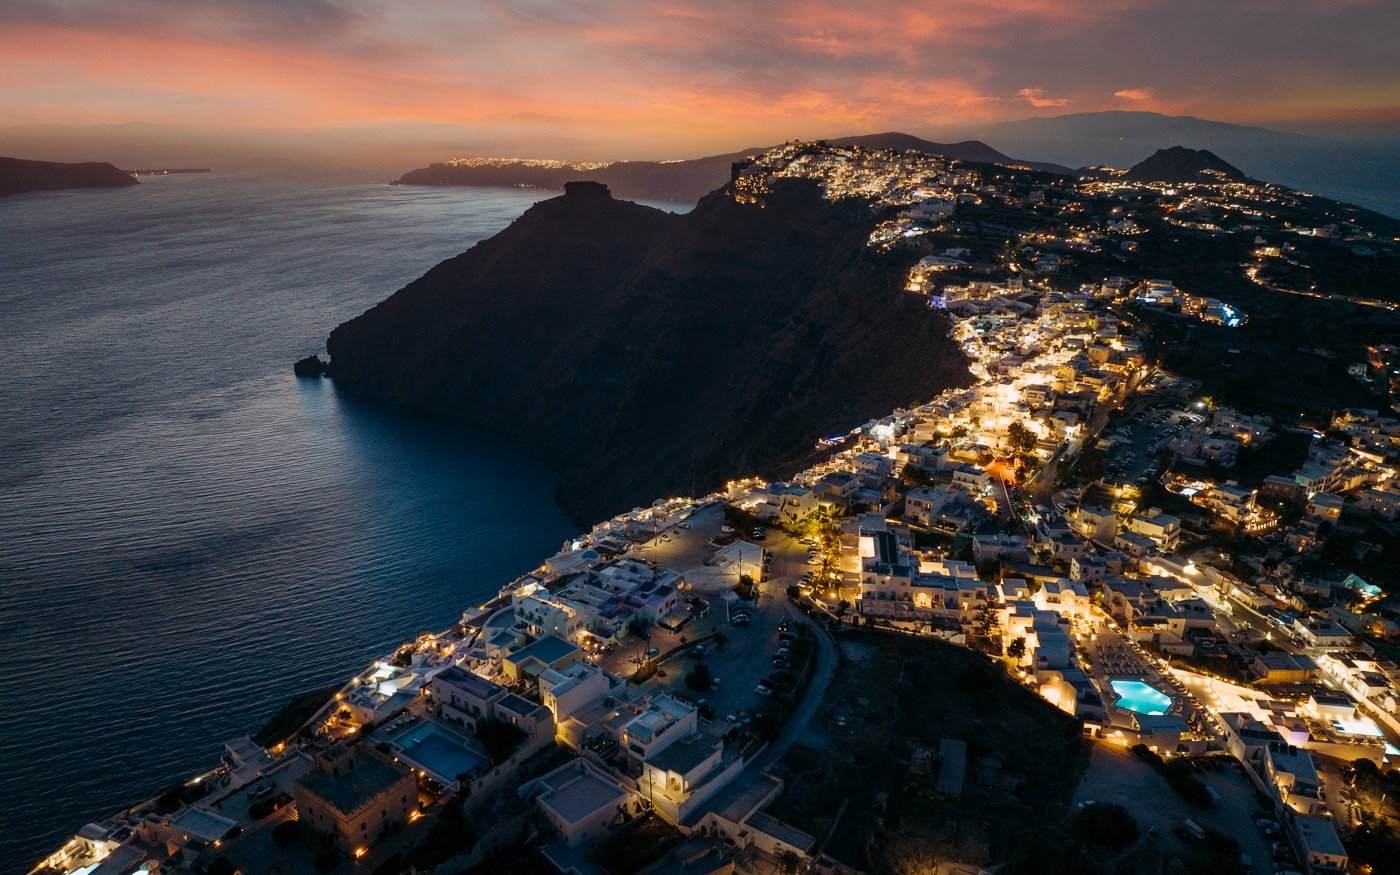 11 Best Hotels in Fira, Santorini for Amazing Caldera Views in 2023